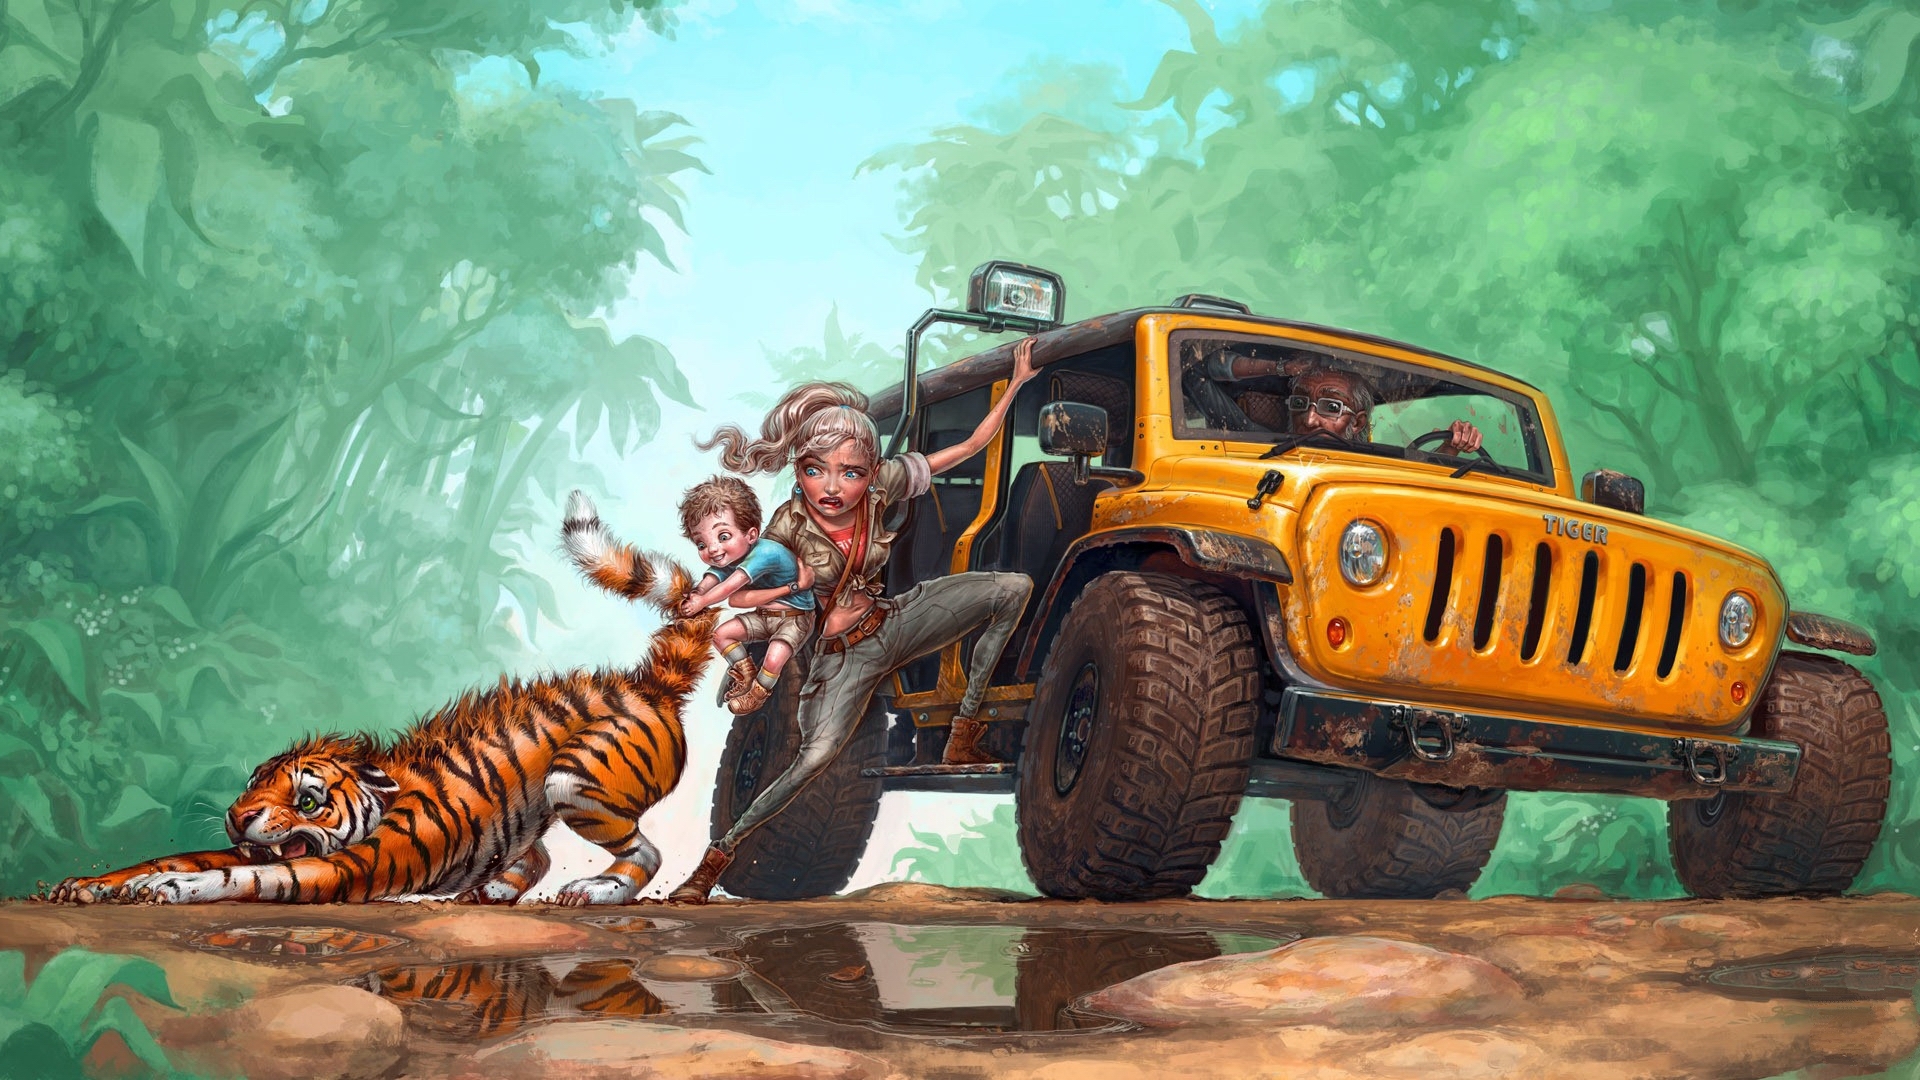 General 1920x1080 car painting humor children animals tiger vehicle artwork